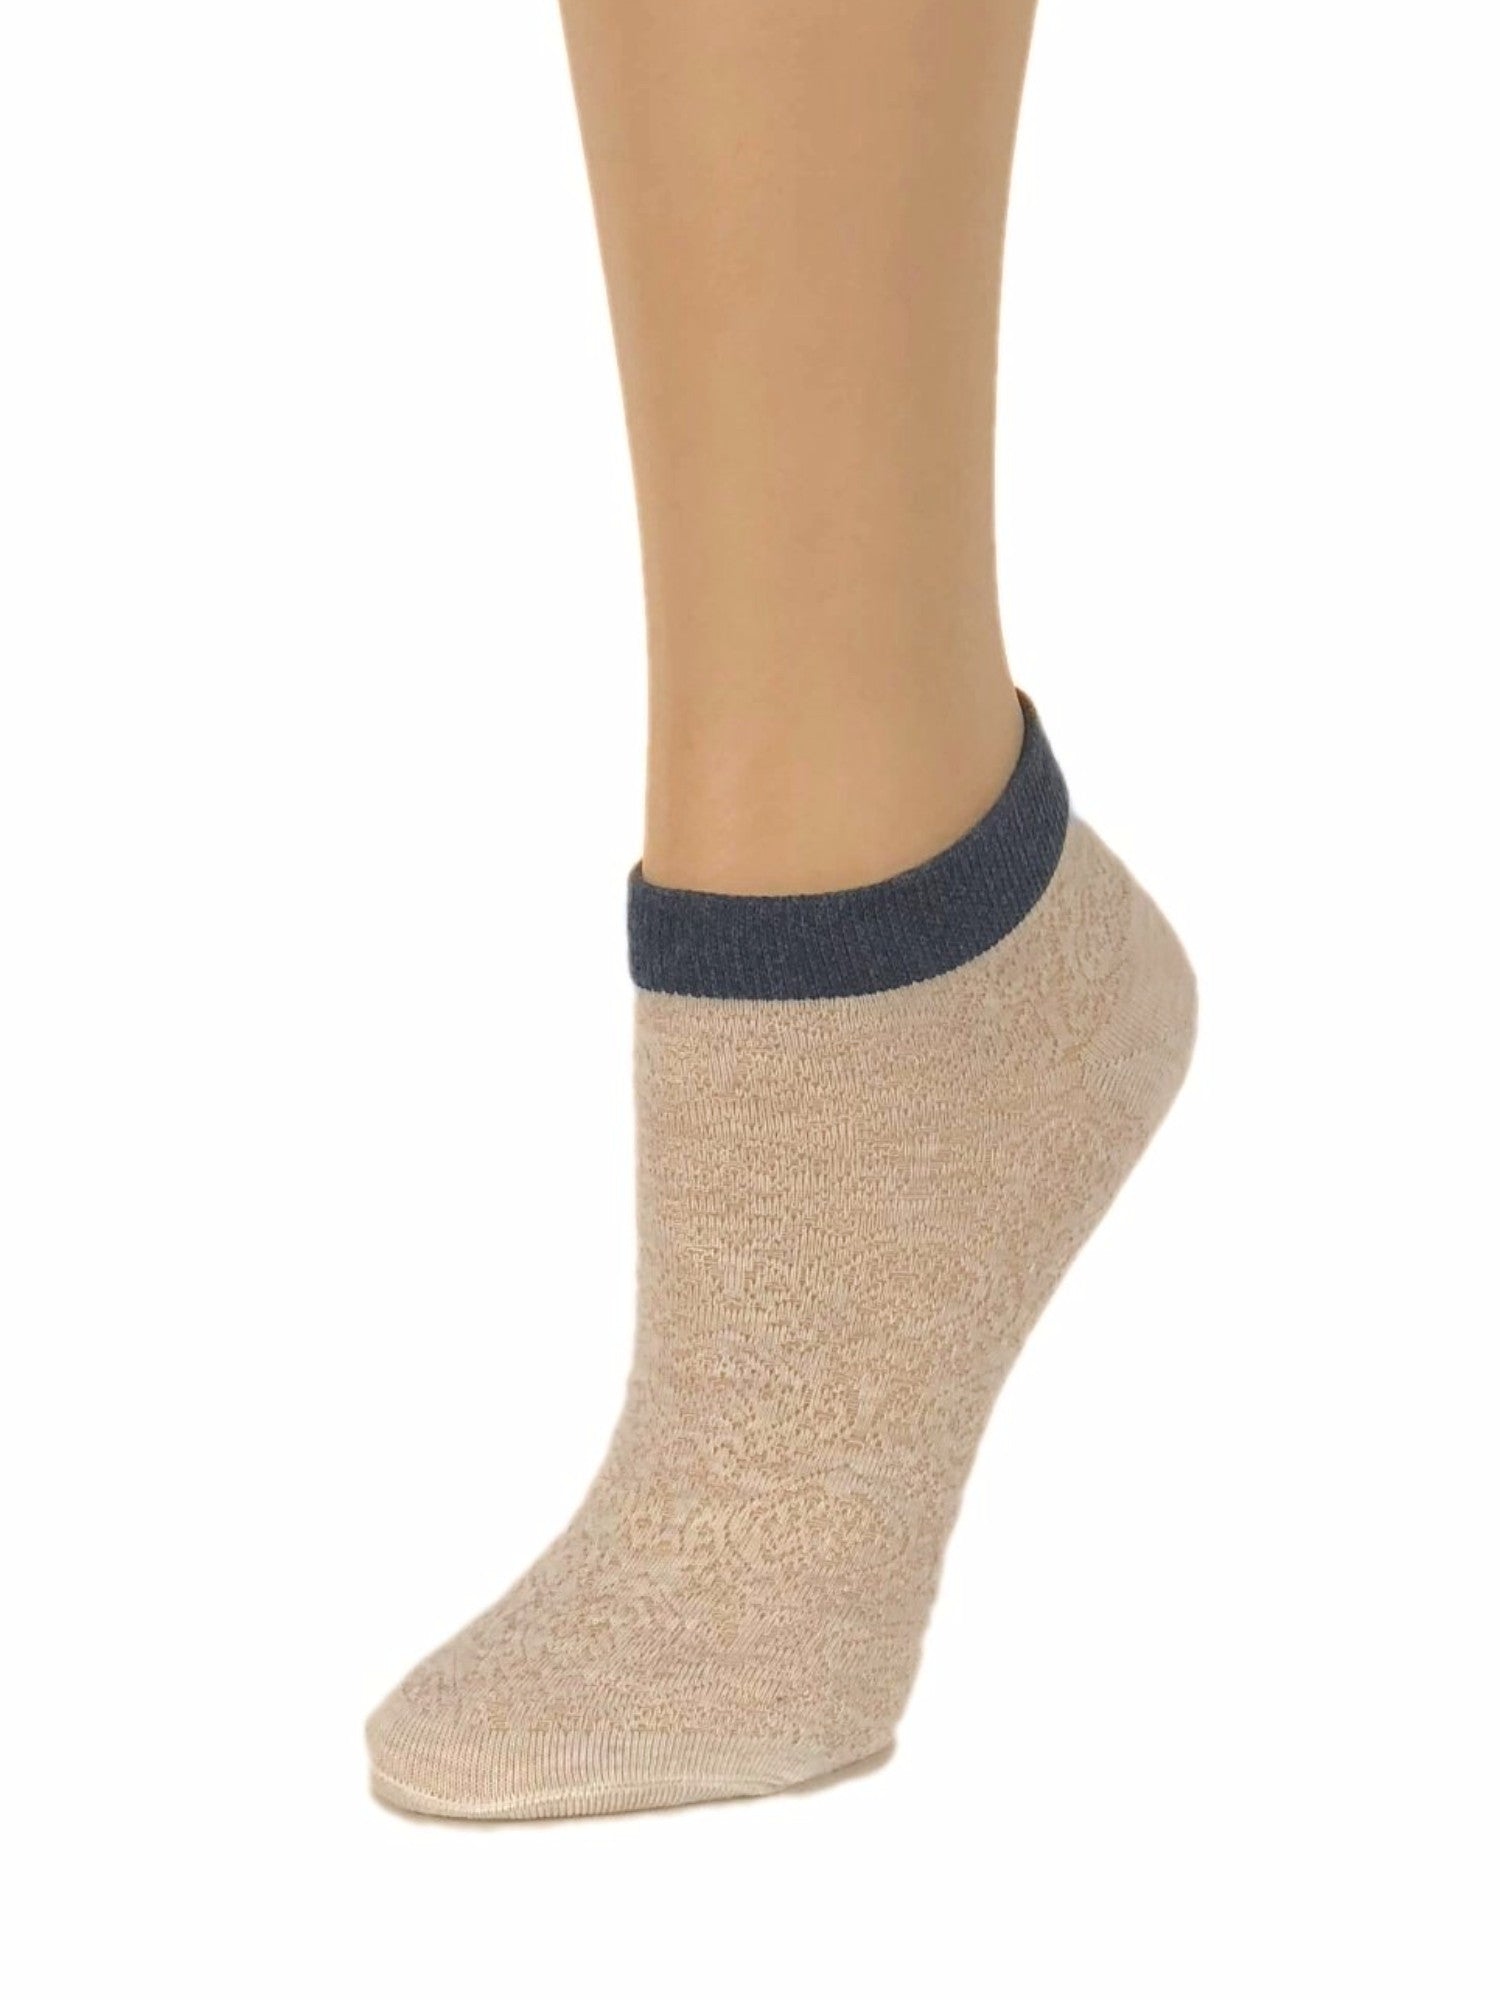 Black Stripped Cream Ankle Sheer Socks - Global Trendz Fashion®